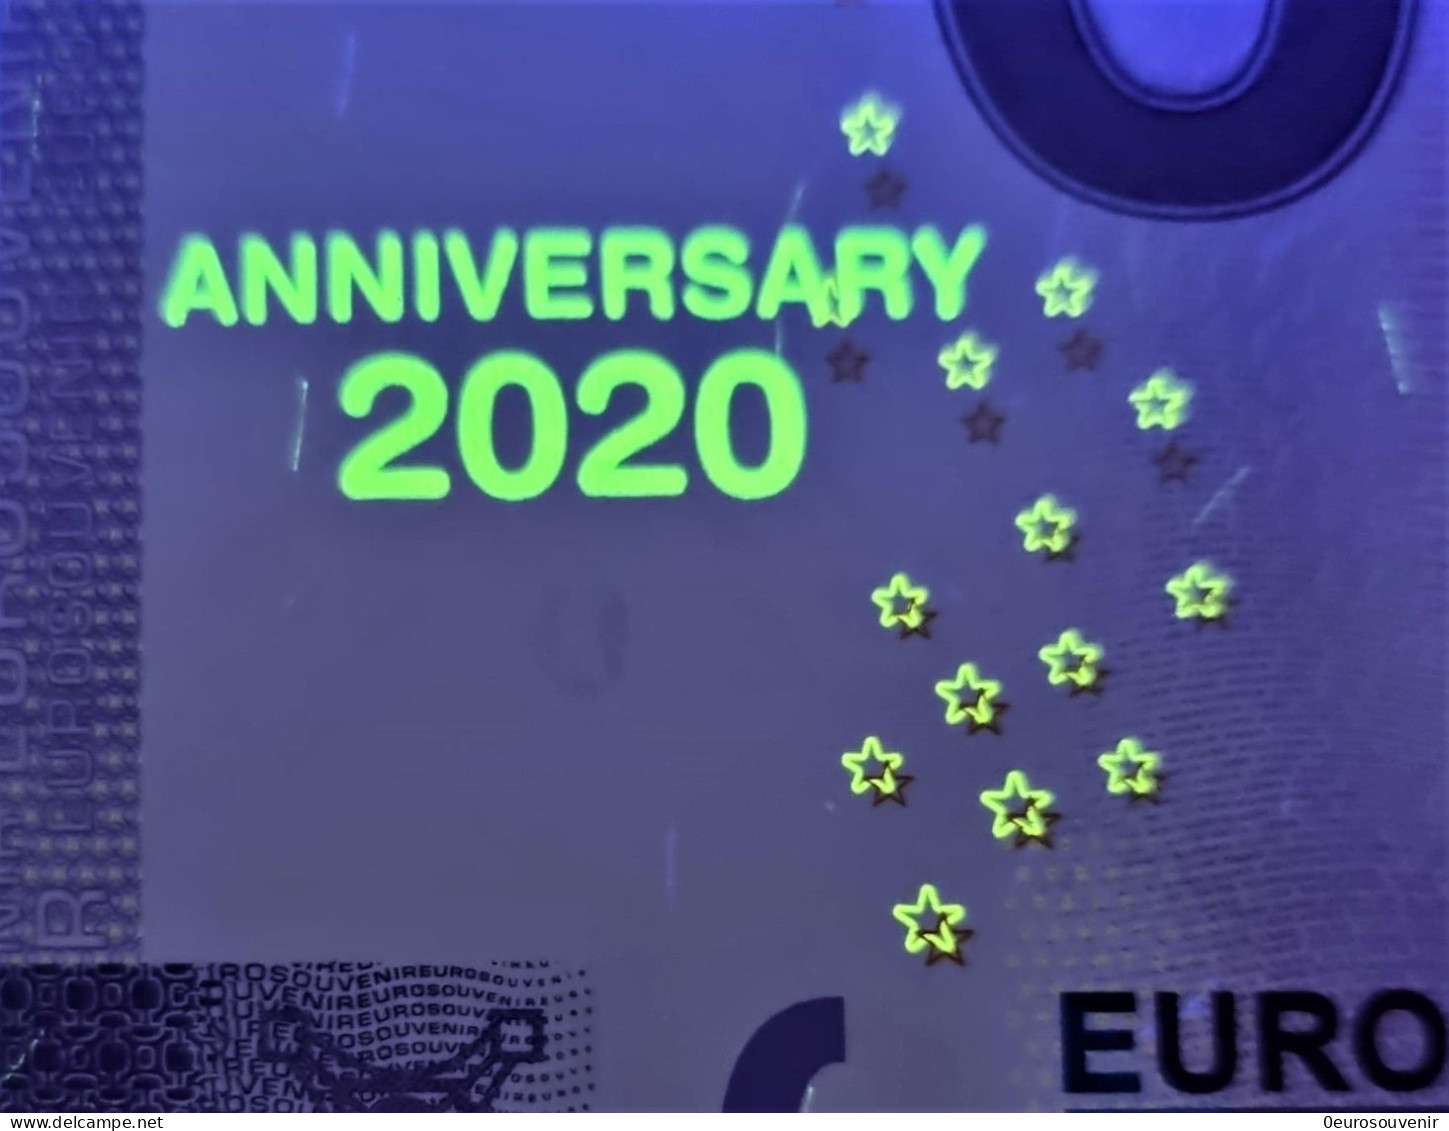 0-Euro XEBA 2020-3 SCHLOSS MARTINSKIRCHEN - STADT MÜHLBERG Set NORMAL+ANNIVERSARY - Private Proofs / Unofficial